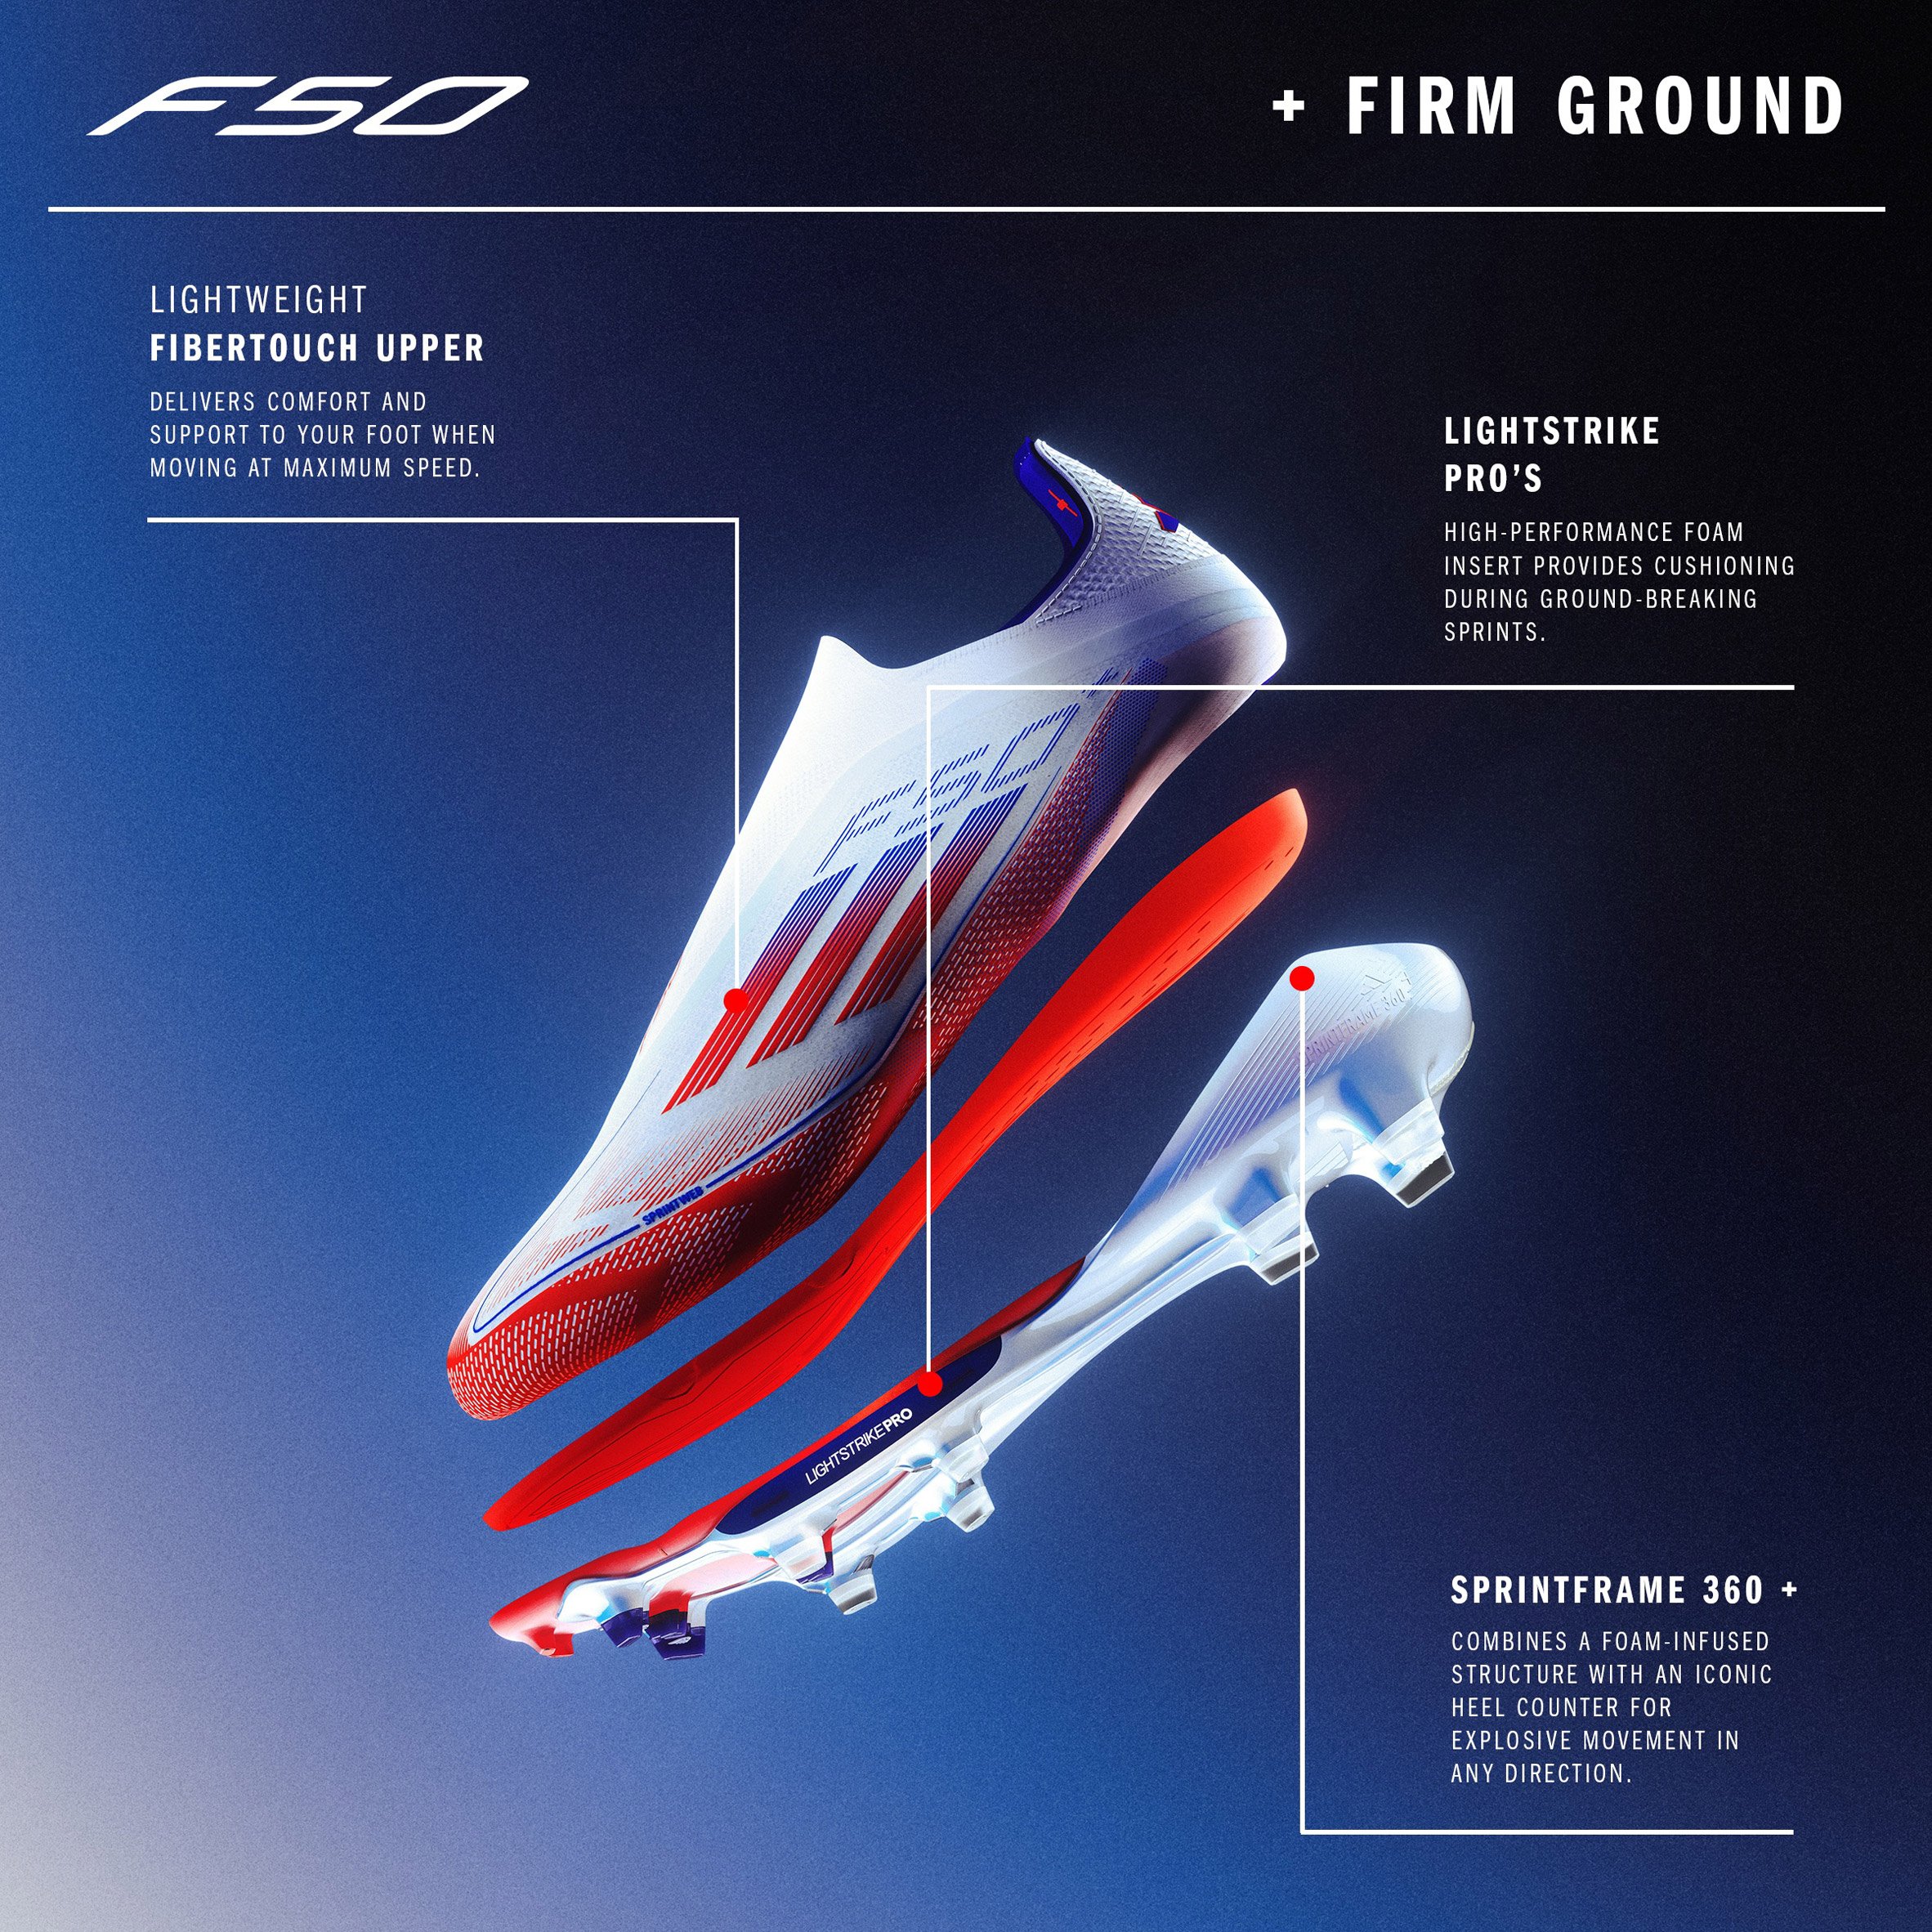 Adidas F50+ football boot